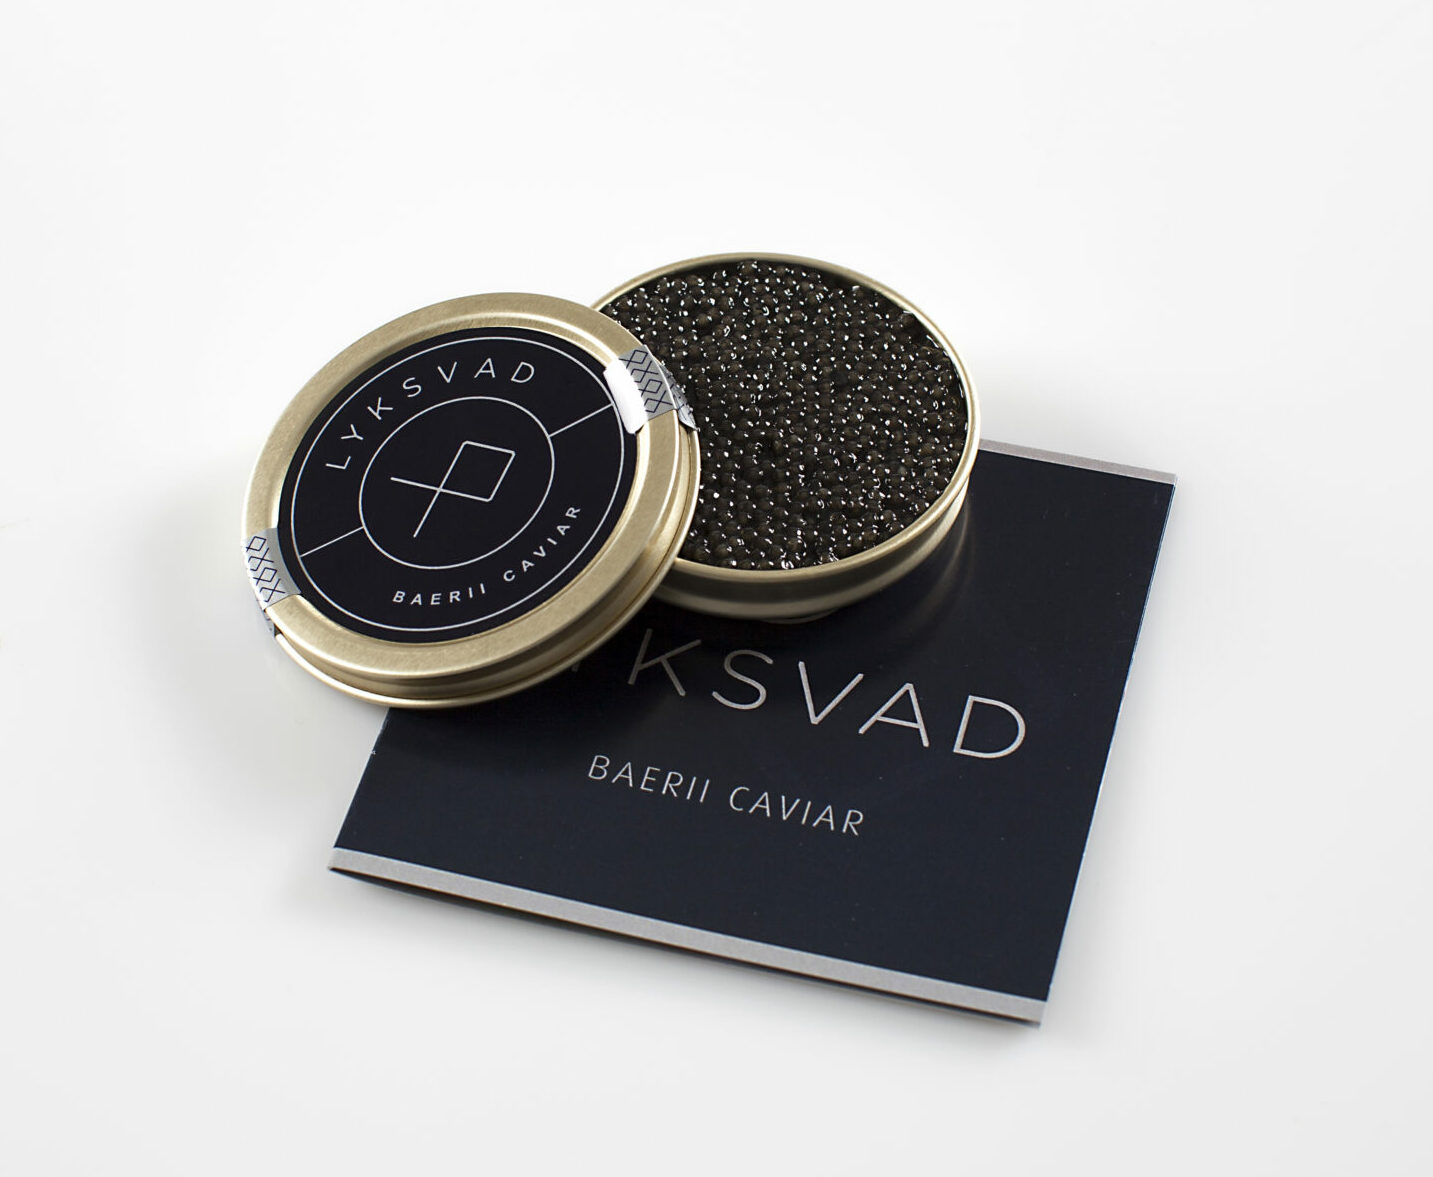 Baerii caviar fra Lyksvad - dansk caviar i top kvalitet